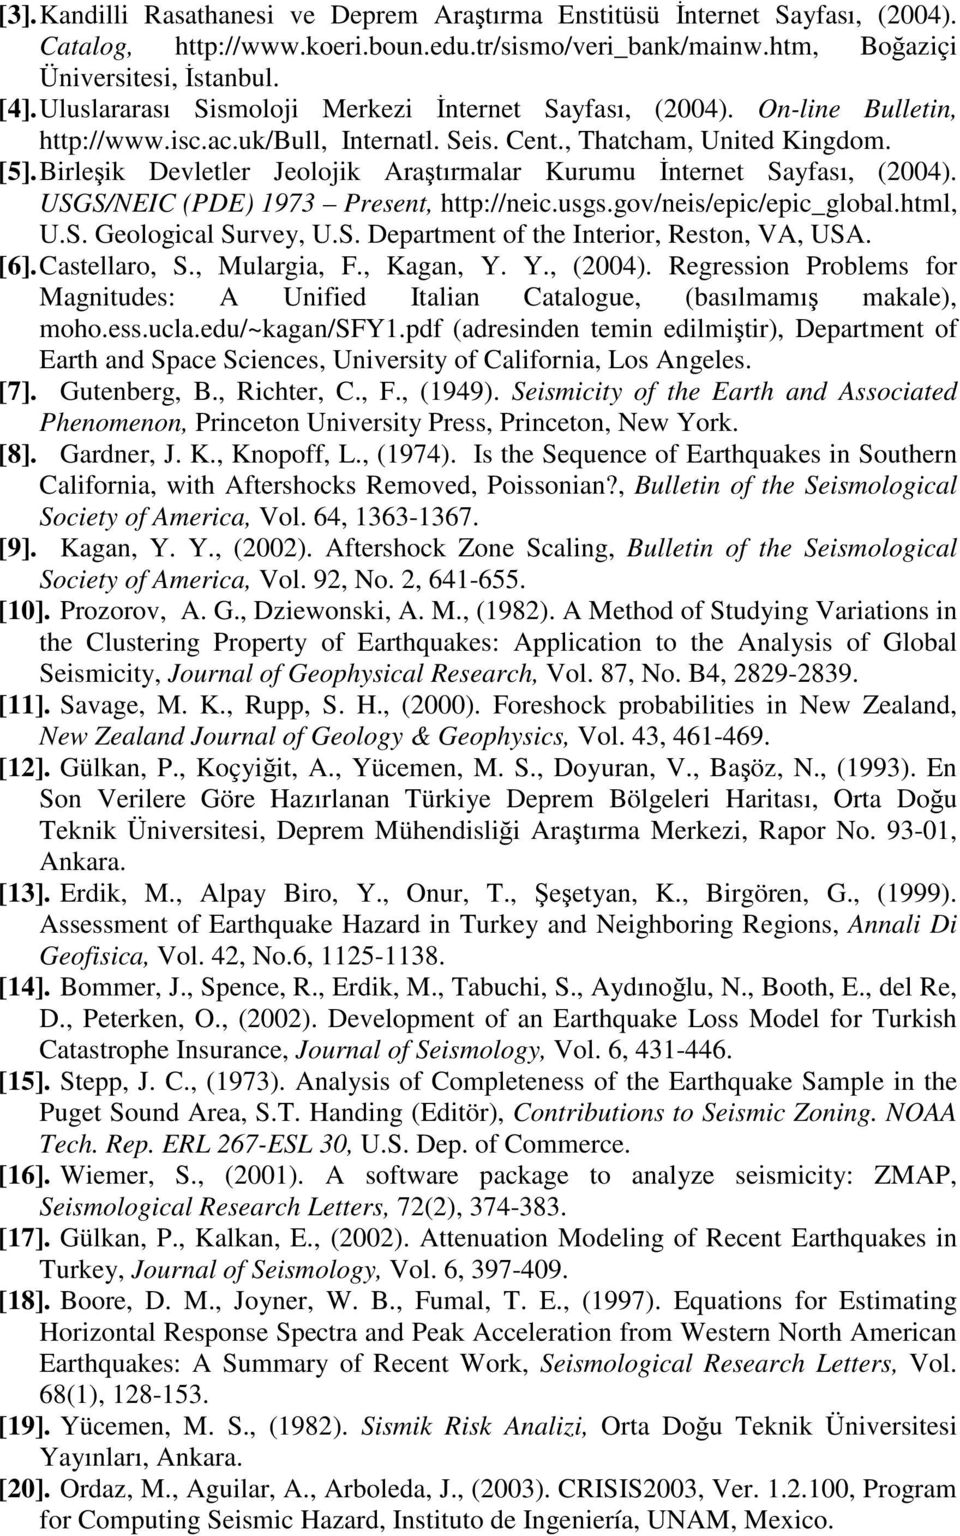 Birleik Devletler Jeolojik Aratırmalar Kurumu nternet Sayfası, (2004). USGS/NEIC (PDE) 1973 Present, http://neic.usgs.gov/neis/epic/epic_global.html, U.S. Geological Survey, U.S. Department of the Interior, Reston, VA, USA.